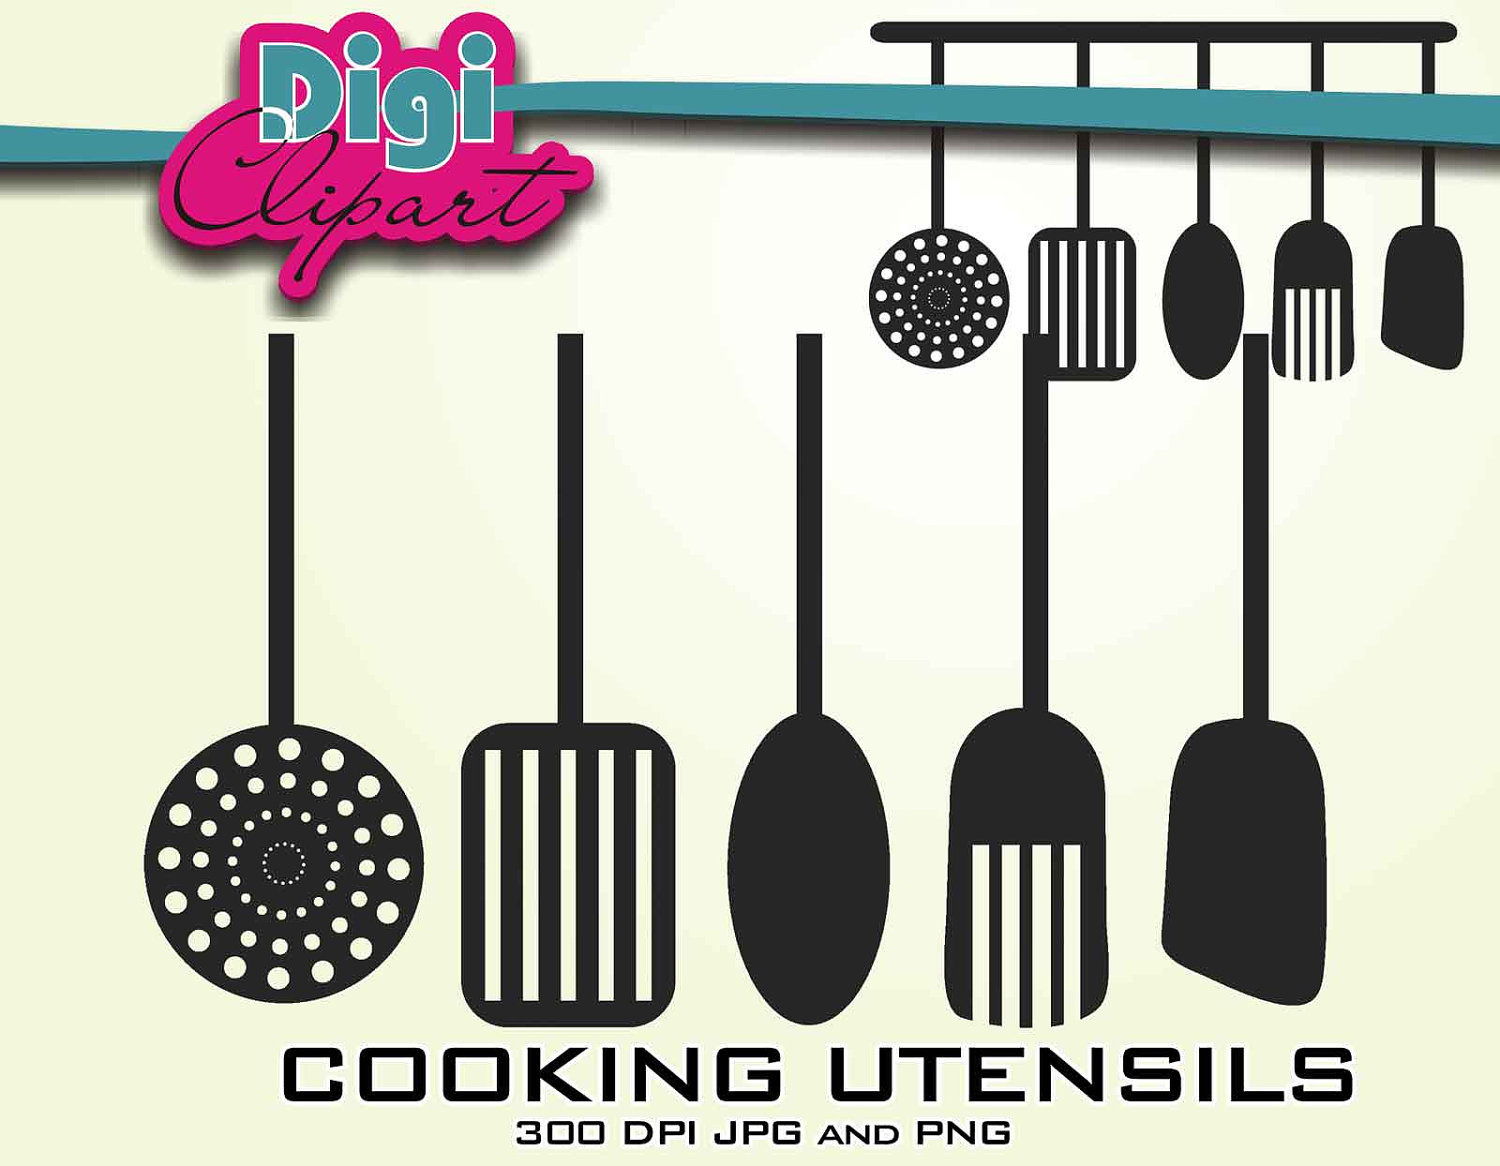 Kitchen Cooking Utensils Silhouette Clip Art By Digifotosclipart